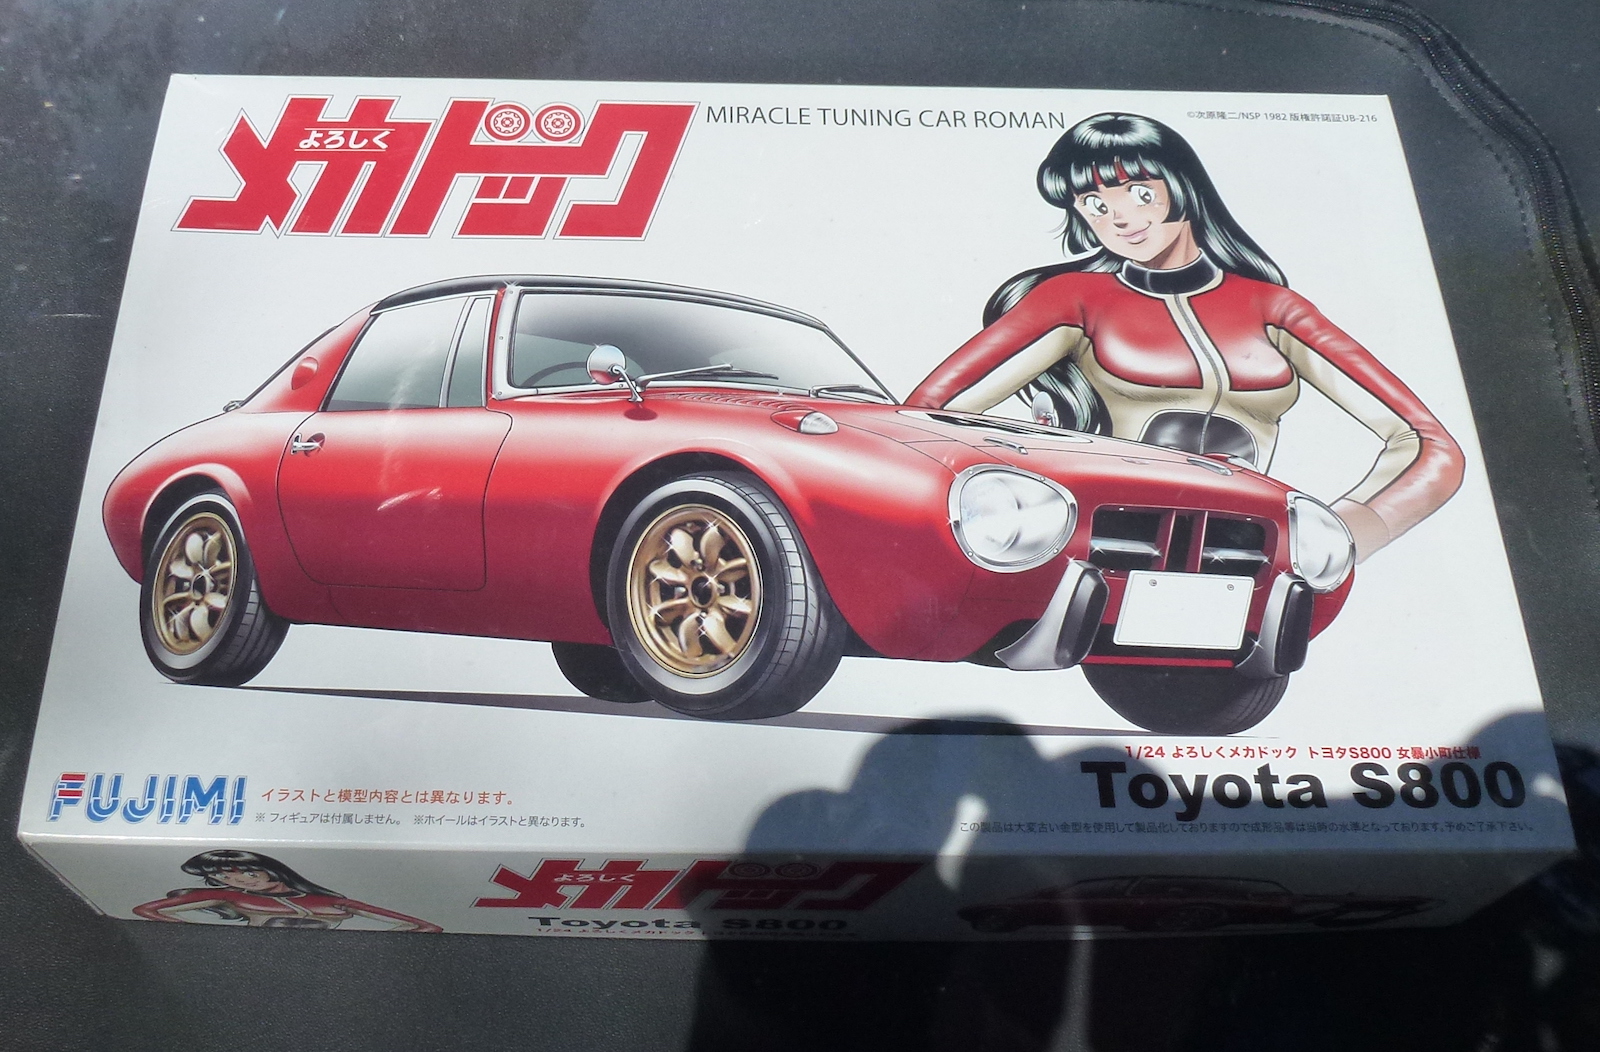 The Toyota Sport 800